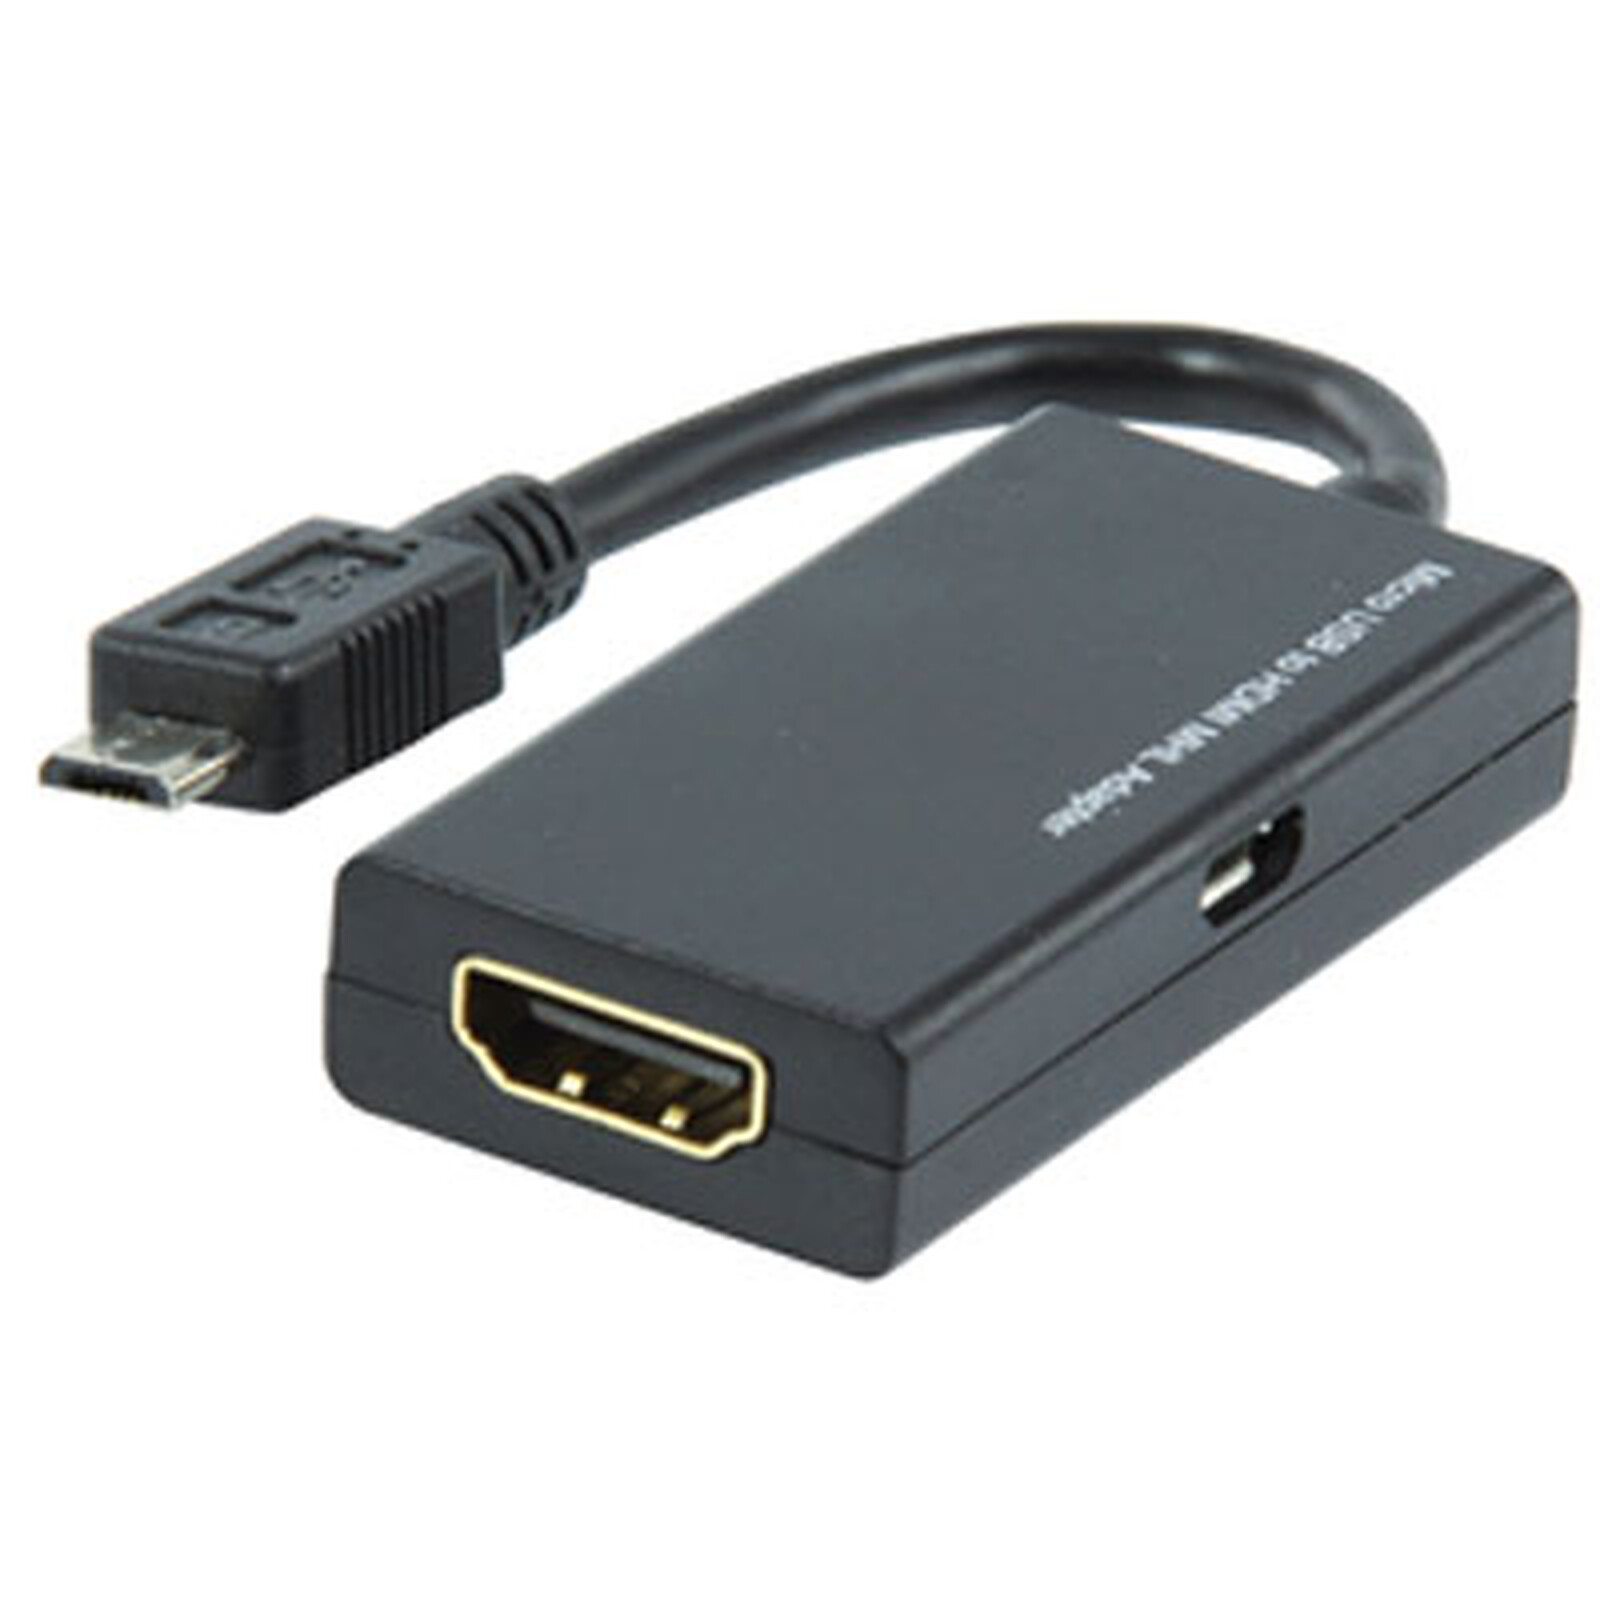 Usb порт телевизора. Micro HDMI для USB порта. Переходник адаптер 50 Pin HDMI USB. Адаптер deppa USB-С to HDMI. Micro USB 3.0 К HDMI MHL адаптер.